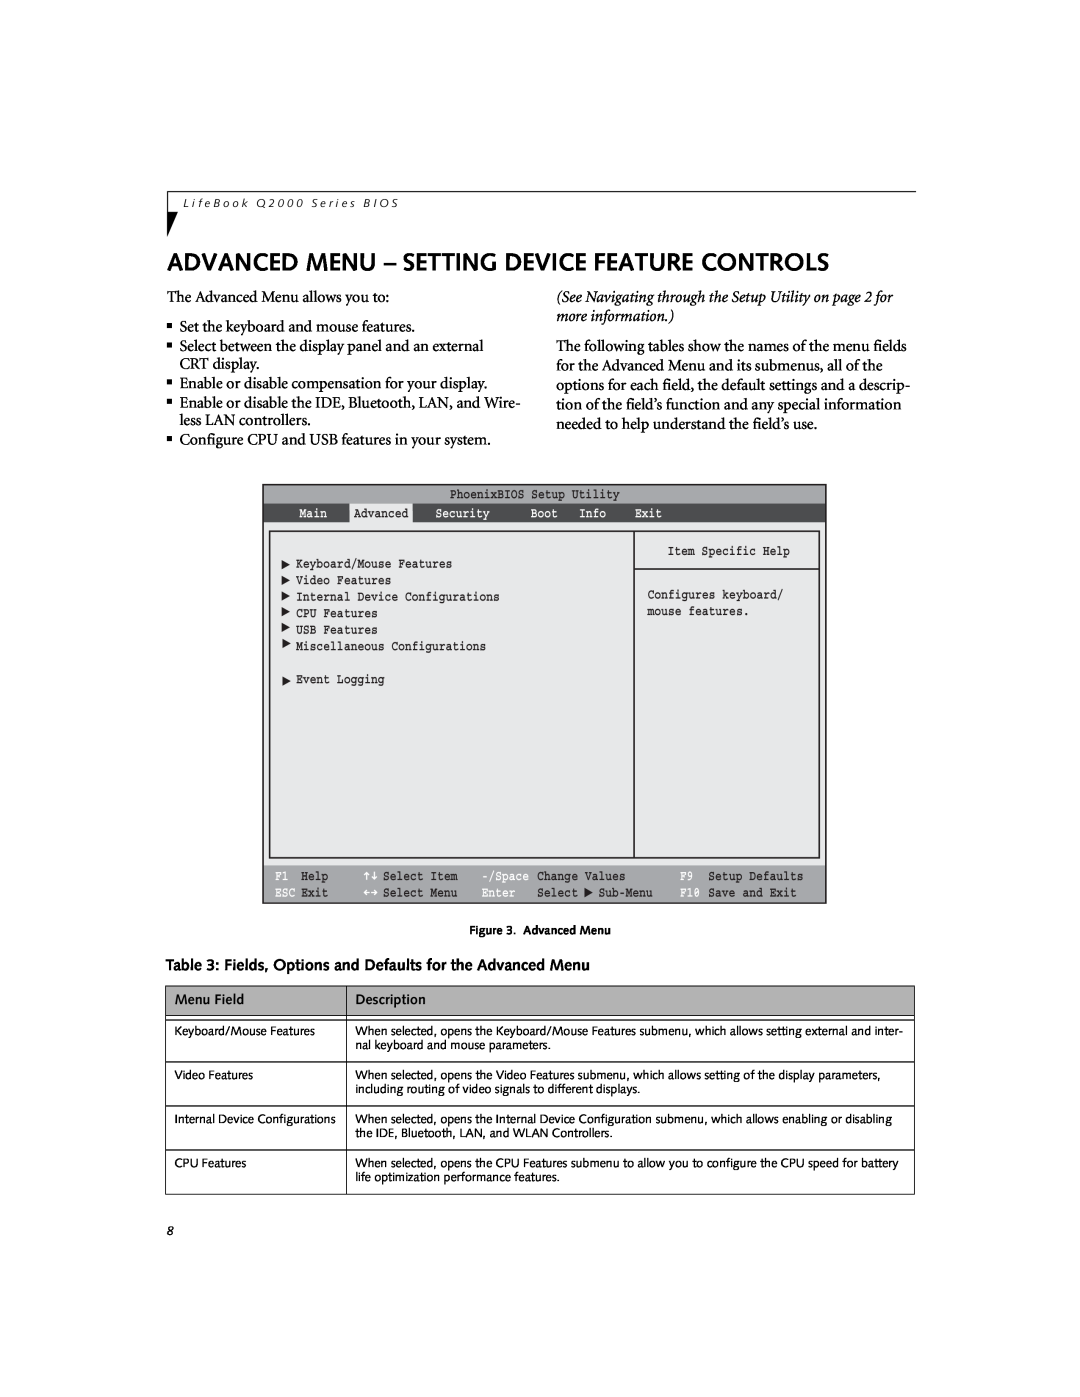 Fujitsu Q2010 manual Advanced Menu - Setting Device Feature Controls, Fields, Options and Defaults for the Advanced Menu 